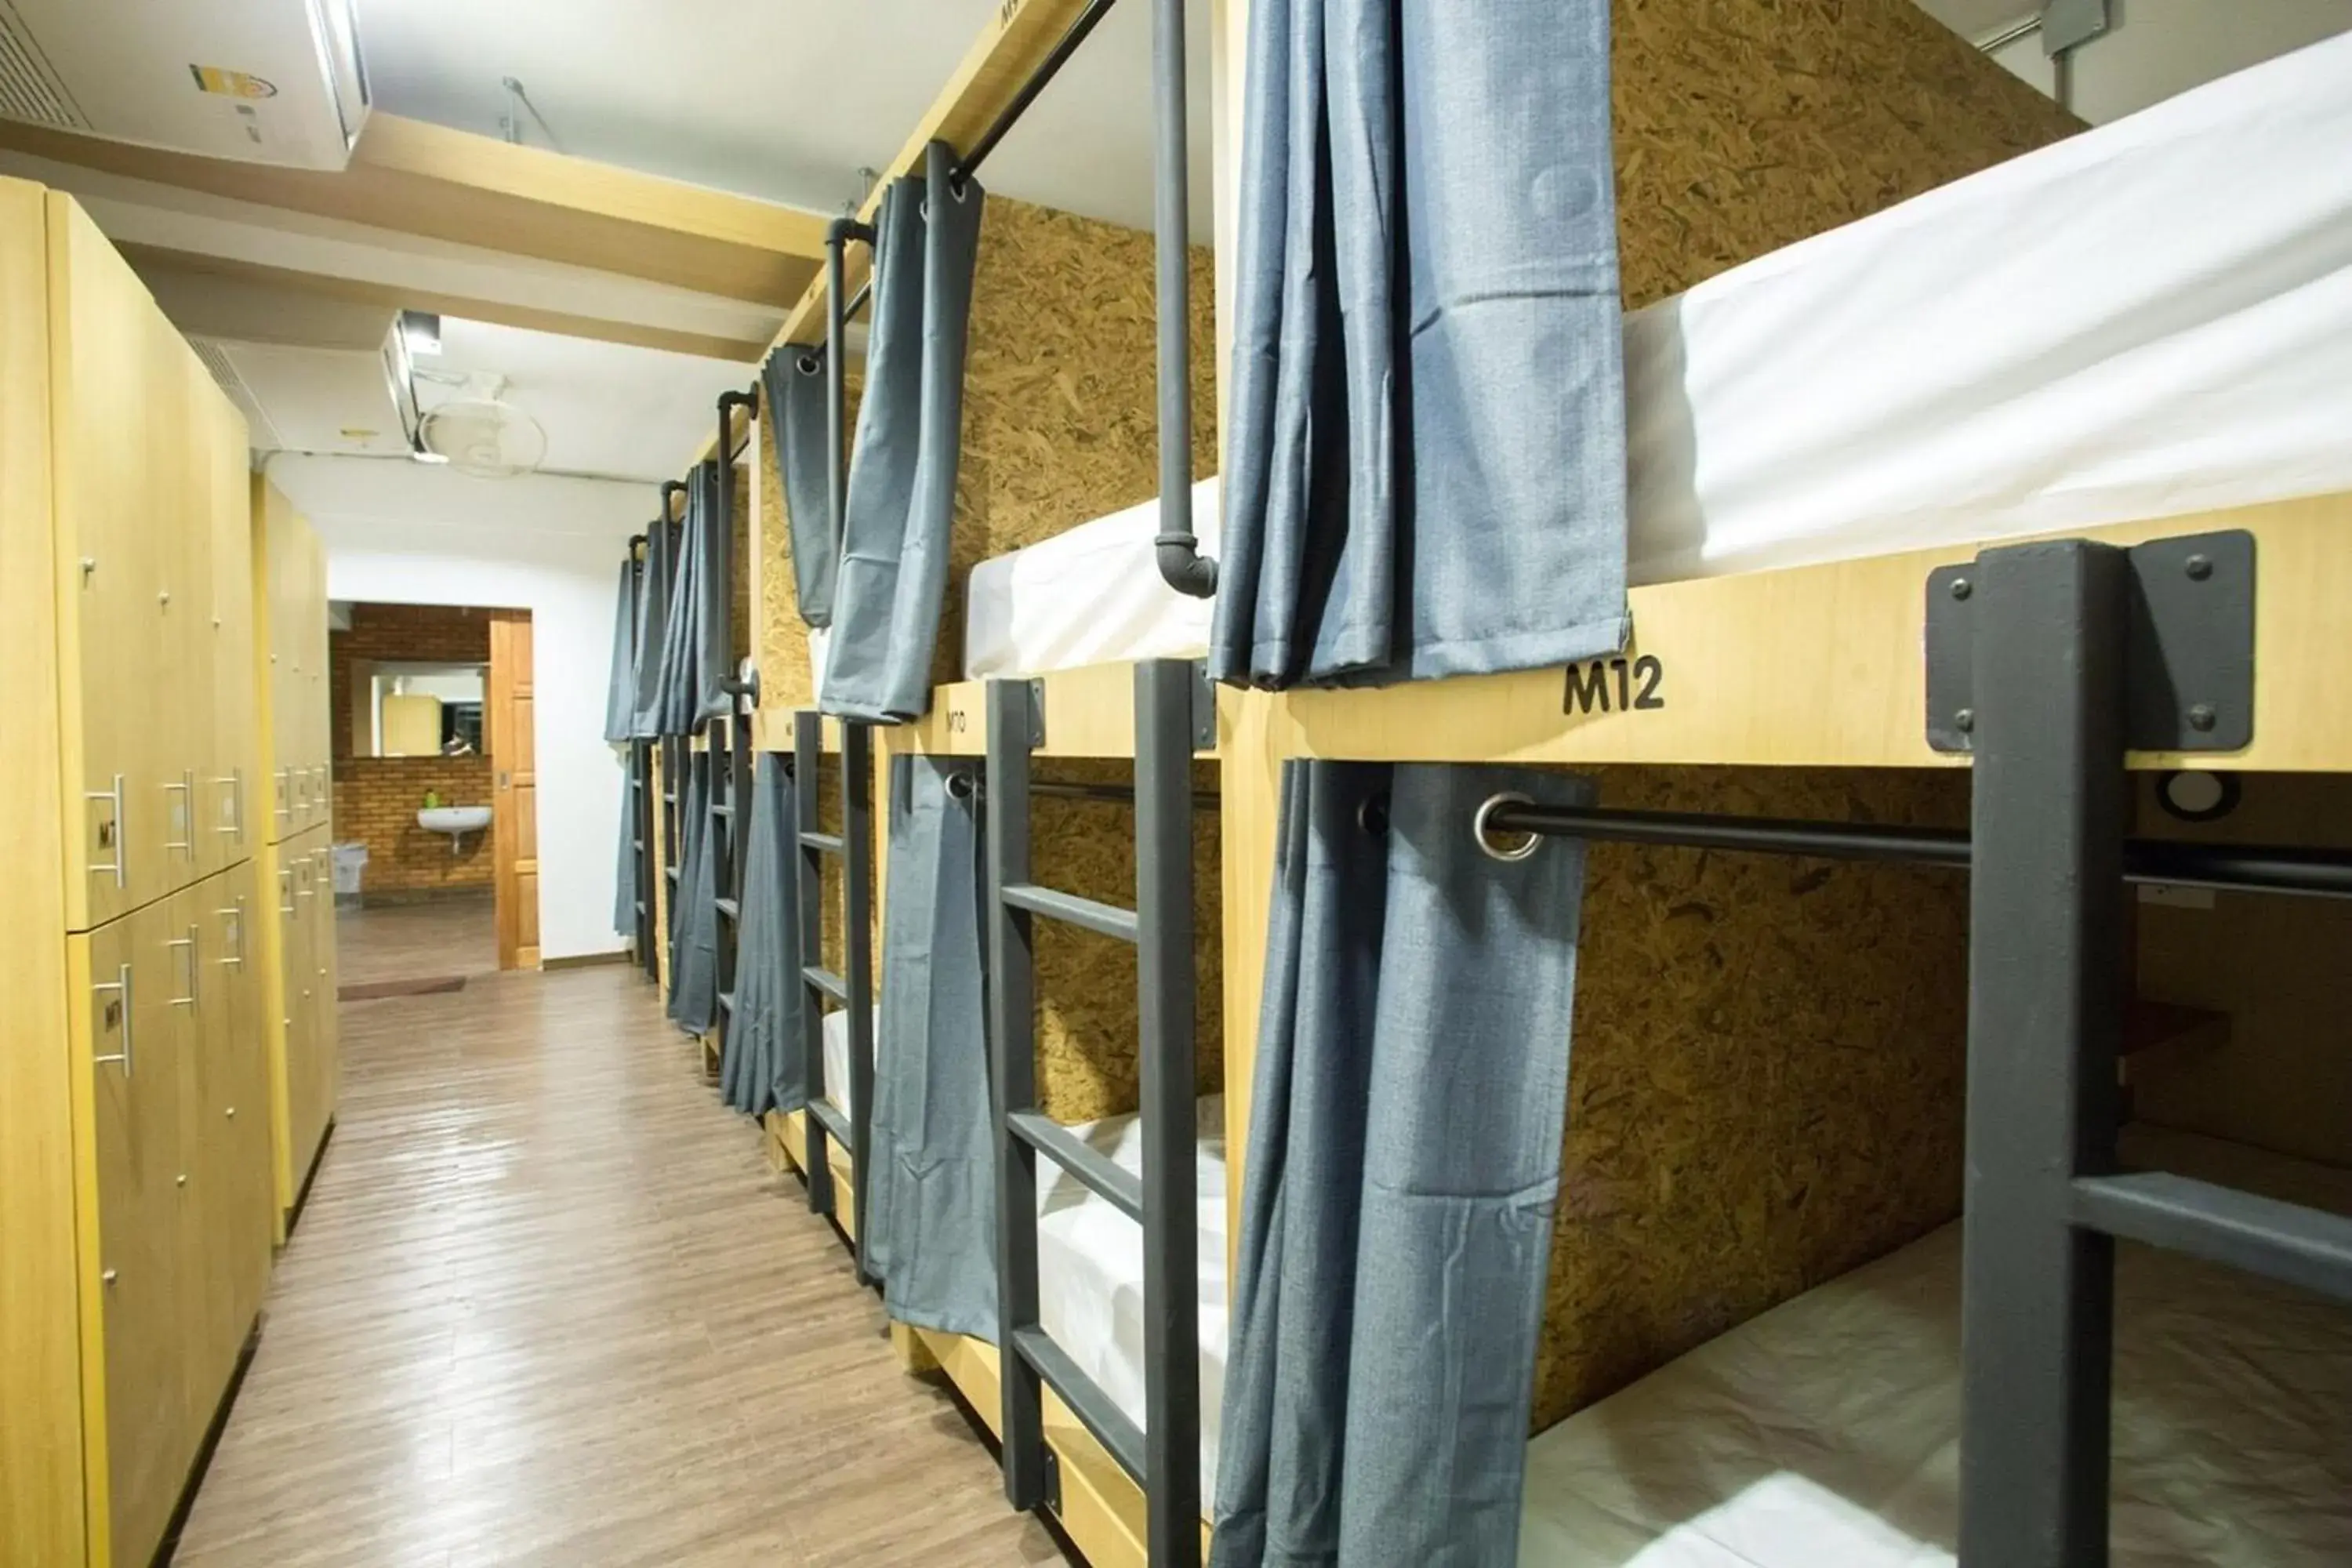 Bed, Bunk Bed in Vestique hostel